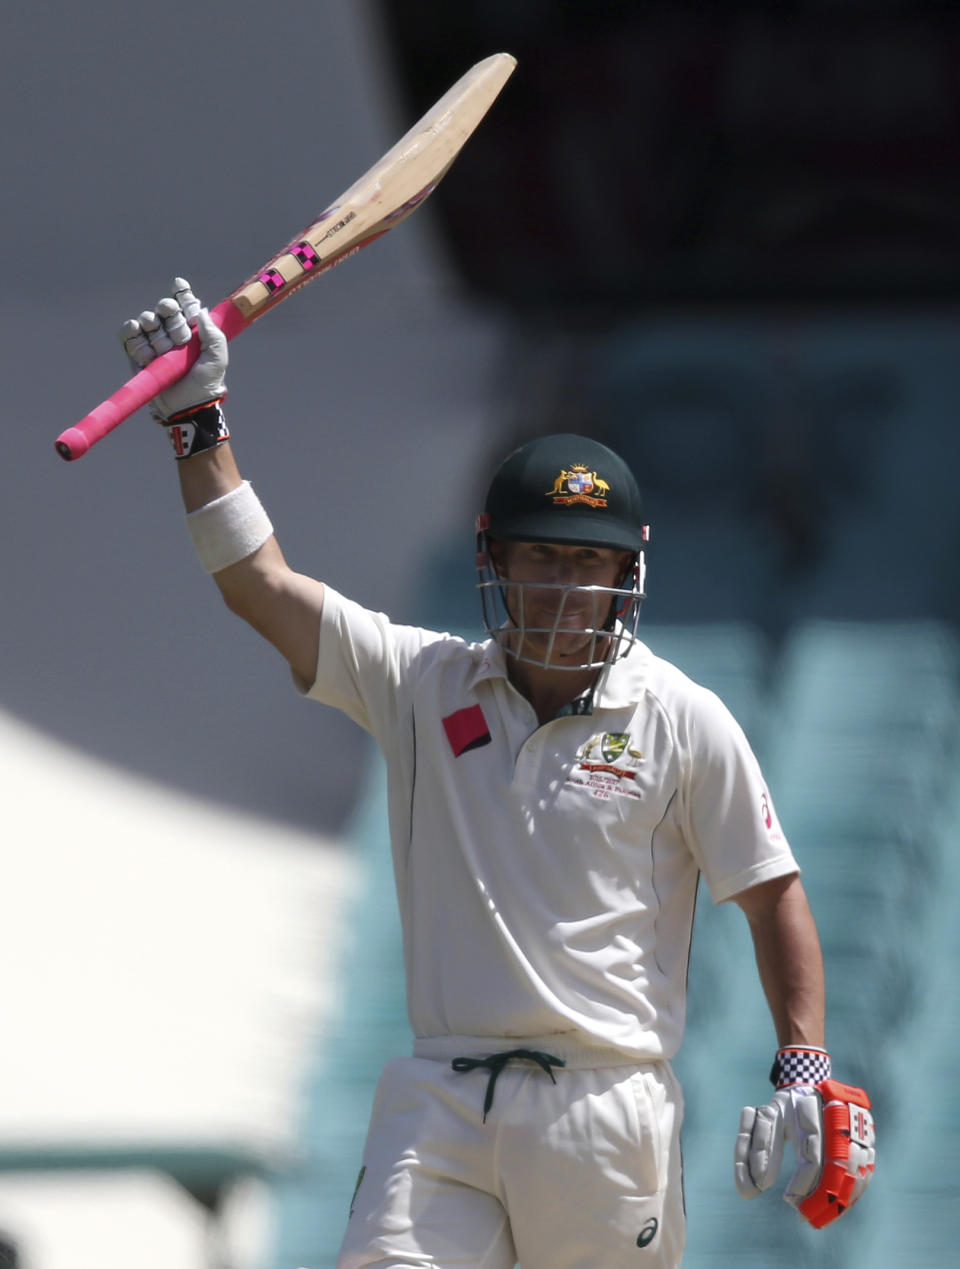 Australia's David Warner raises his bat after scoring a quick 50 runs against Pakistan during their cricket test match in Sydney, Australia, Friday, Jan. 6, 2017. (AP Photo/Rick Rycroft)